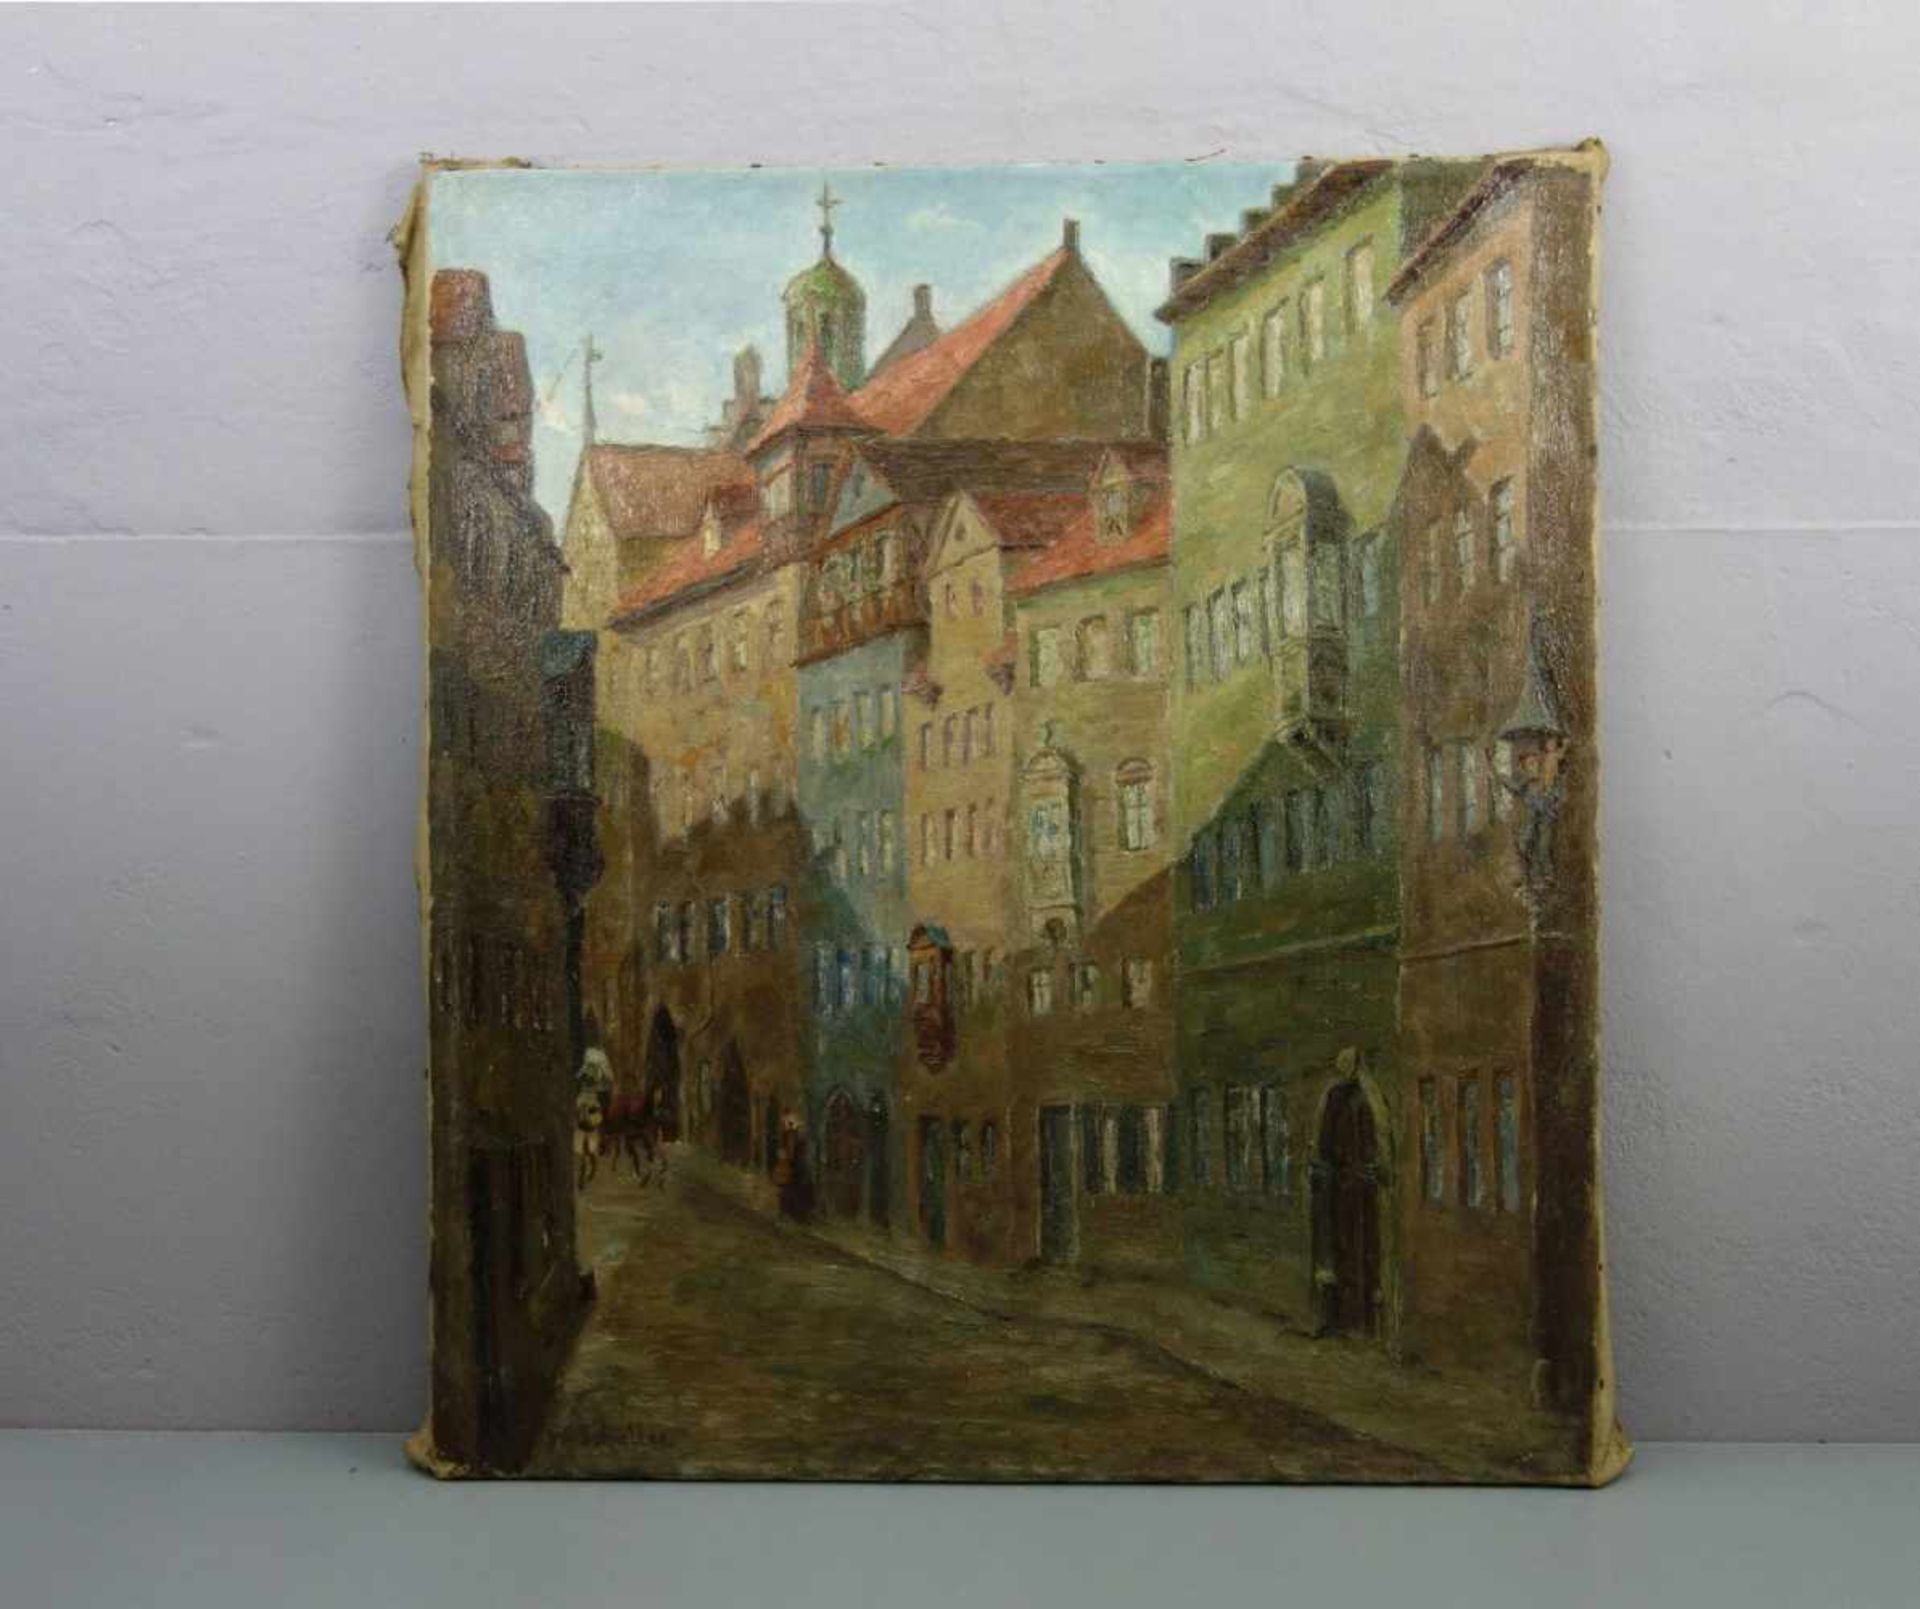 SCHALLER, WILLY (geb. 1889), Gemälde / painting: "Stadtgasse", Öl auf Leinwand / oil on canvas, u.